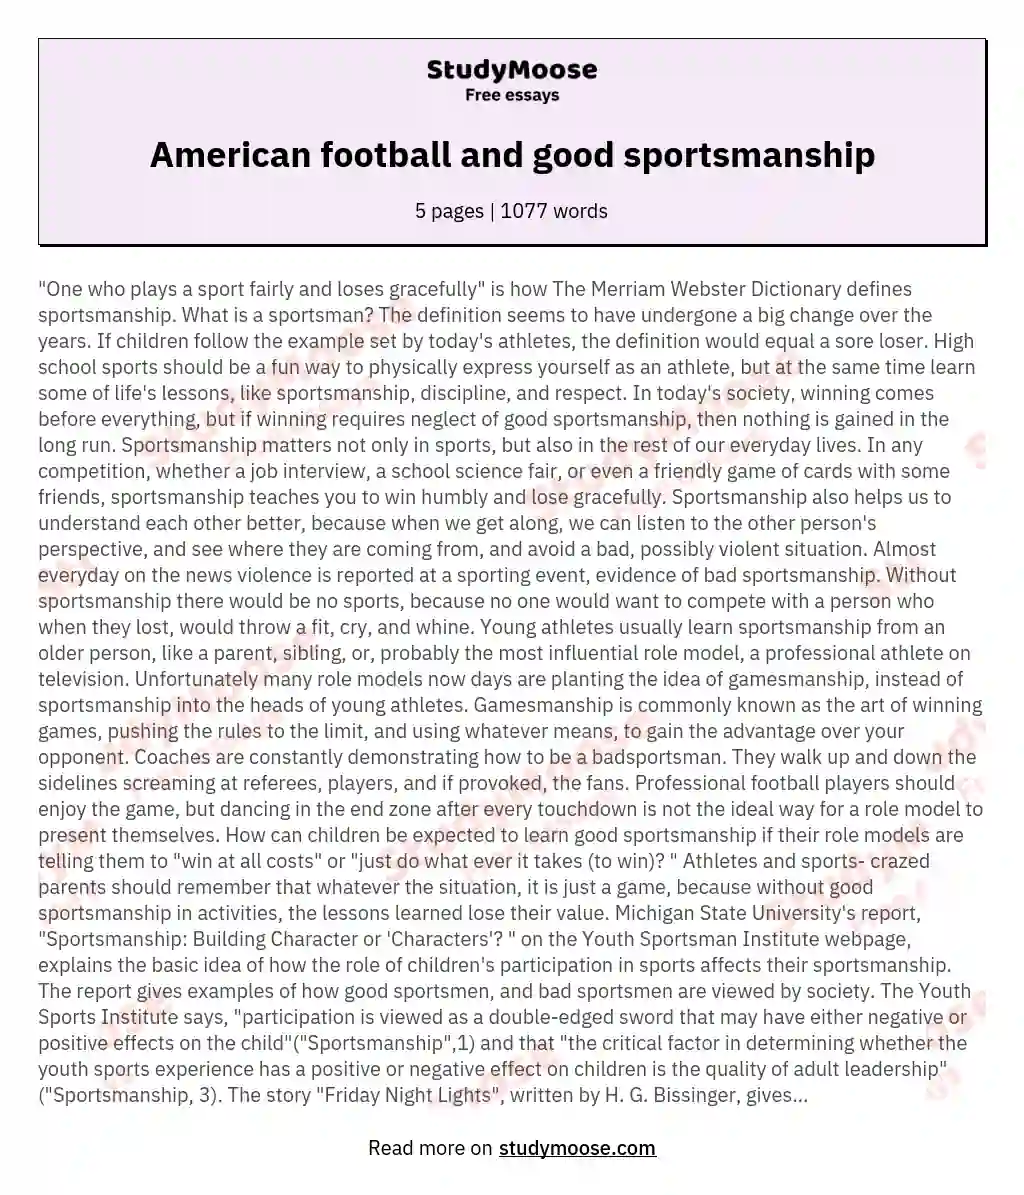 American football and good sportsmanship